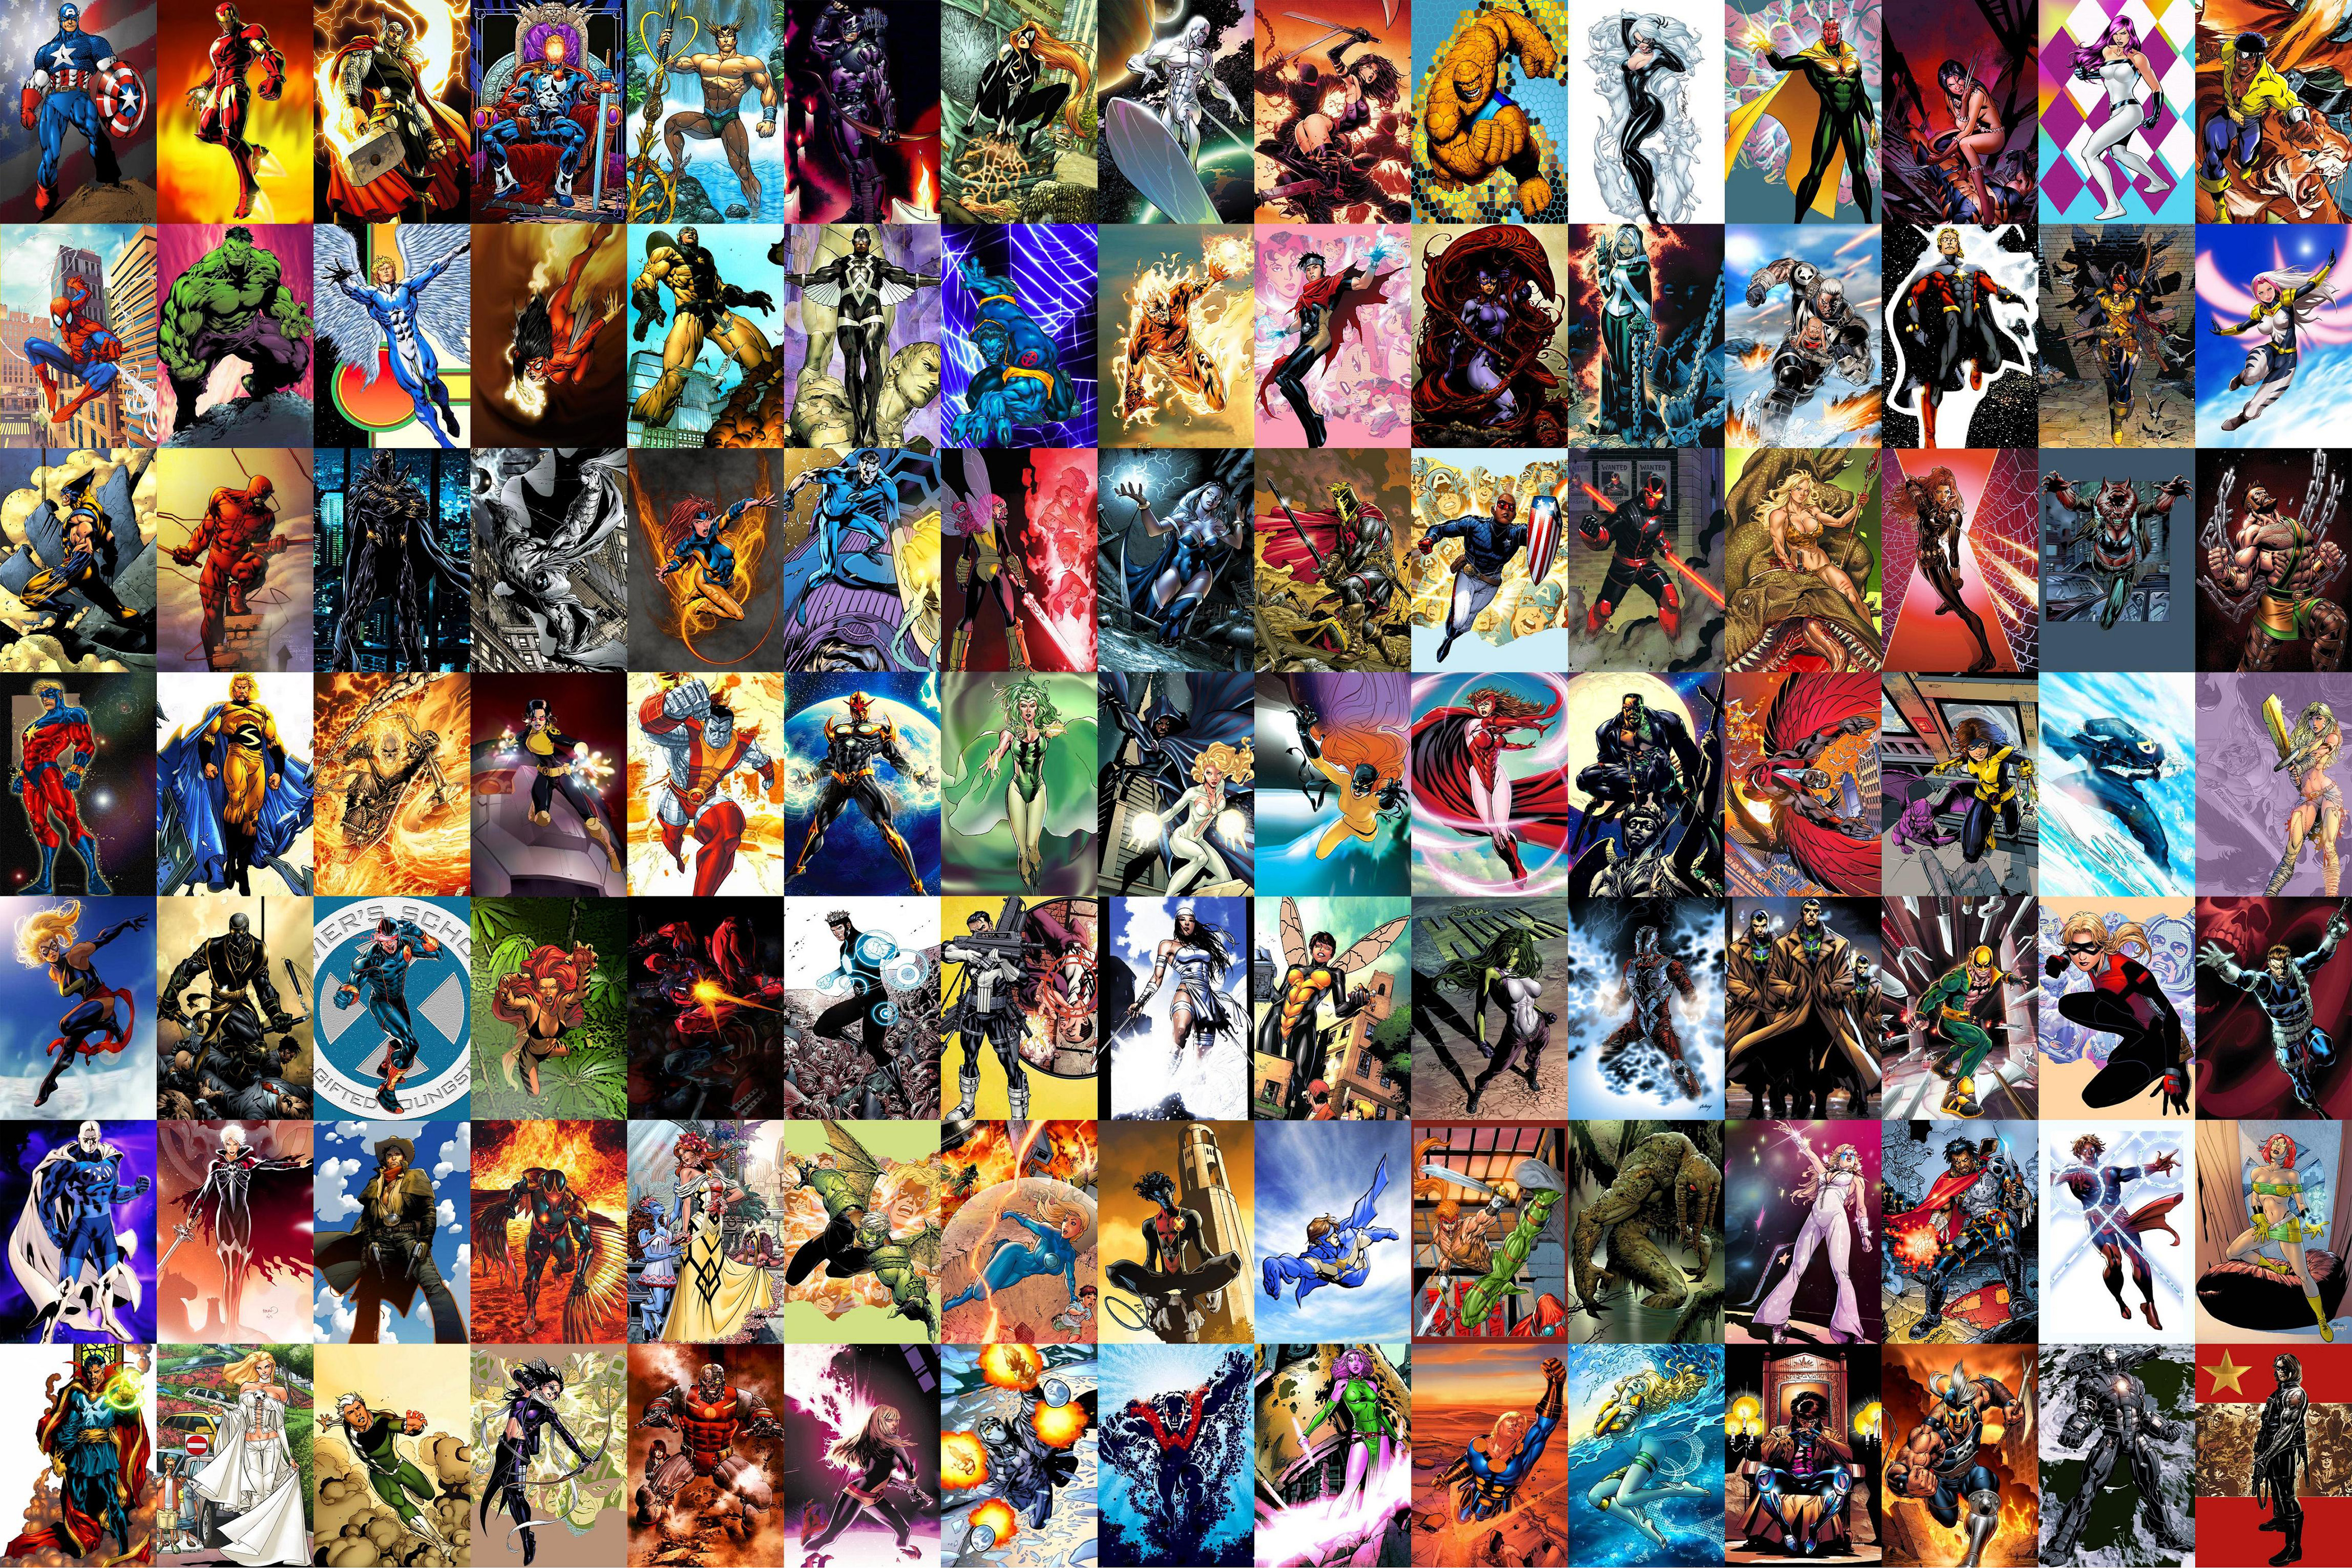 comics, marvel comics, angel (marvel comics), beast (marvel comics), ben grimm, bishop (marvel comics), black bolt, black cat (marvel comics), black panther (marvel comics), black widow, captain america, captain marvel, cassandra lang, cloak (marvel comics), colossus, cyclops (marvel comics), dagger (marvel comics), daredevil, dazzler (marvel comics), deadpool, deathlok, doctor strange, emma frost, falcon (marvel comics), gambit (marvel comics), ghost rider, havok (marvel comics), hawkeye, hellcat (marvel comics), hercules (marvel comics), hulk, human torch (marvel comics), invisible woman, iron fist (marvel comics), iron man, jean grey, jessica jones, johnny storm, jubilee (marvel comics), kitty pryde, lockheed (marvel comics), luke cage, magik (marvel comics), man thing, medusa (marvel comics), mister fantastic, moon knight, ms marvel, namor the sub mariner, nick fury, nightcrawler (marvel comics), nova (marvel comics), phoenix (marvel comics), pixie (marvel comics), power man, psylocke (marvel comics), punisher, quicksilver (marvel comics), rachel summers, reed richards, rogue (marvel comics), scarlet witch, sentinel (marvel comics), sentry (marvel comics), shanna the she devil, she hulk, silver surfer, spider man, spider woman, storm (marvel comics), sub mariner, susan storm, t'challa, the cat (marvel comics), thing (marvel comics), thor, tigra (marvel comics), vision (marvel comics), war machine, wasp (marvel comics), white witch (marvel comics), wiccan (marvel comics), winter soldier, wolverine, wonder man, x 23, yellowjacket (marvel comics)